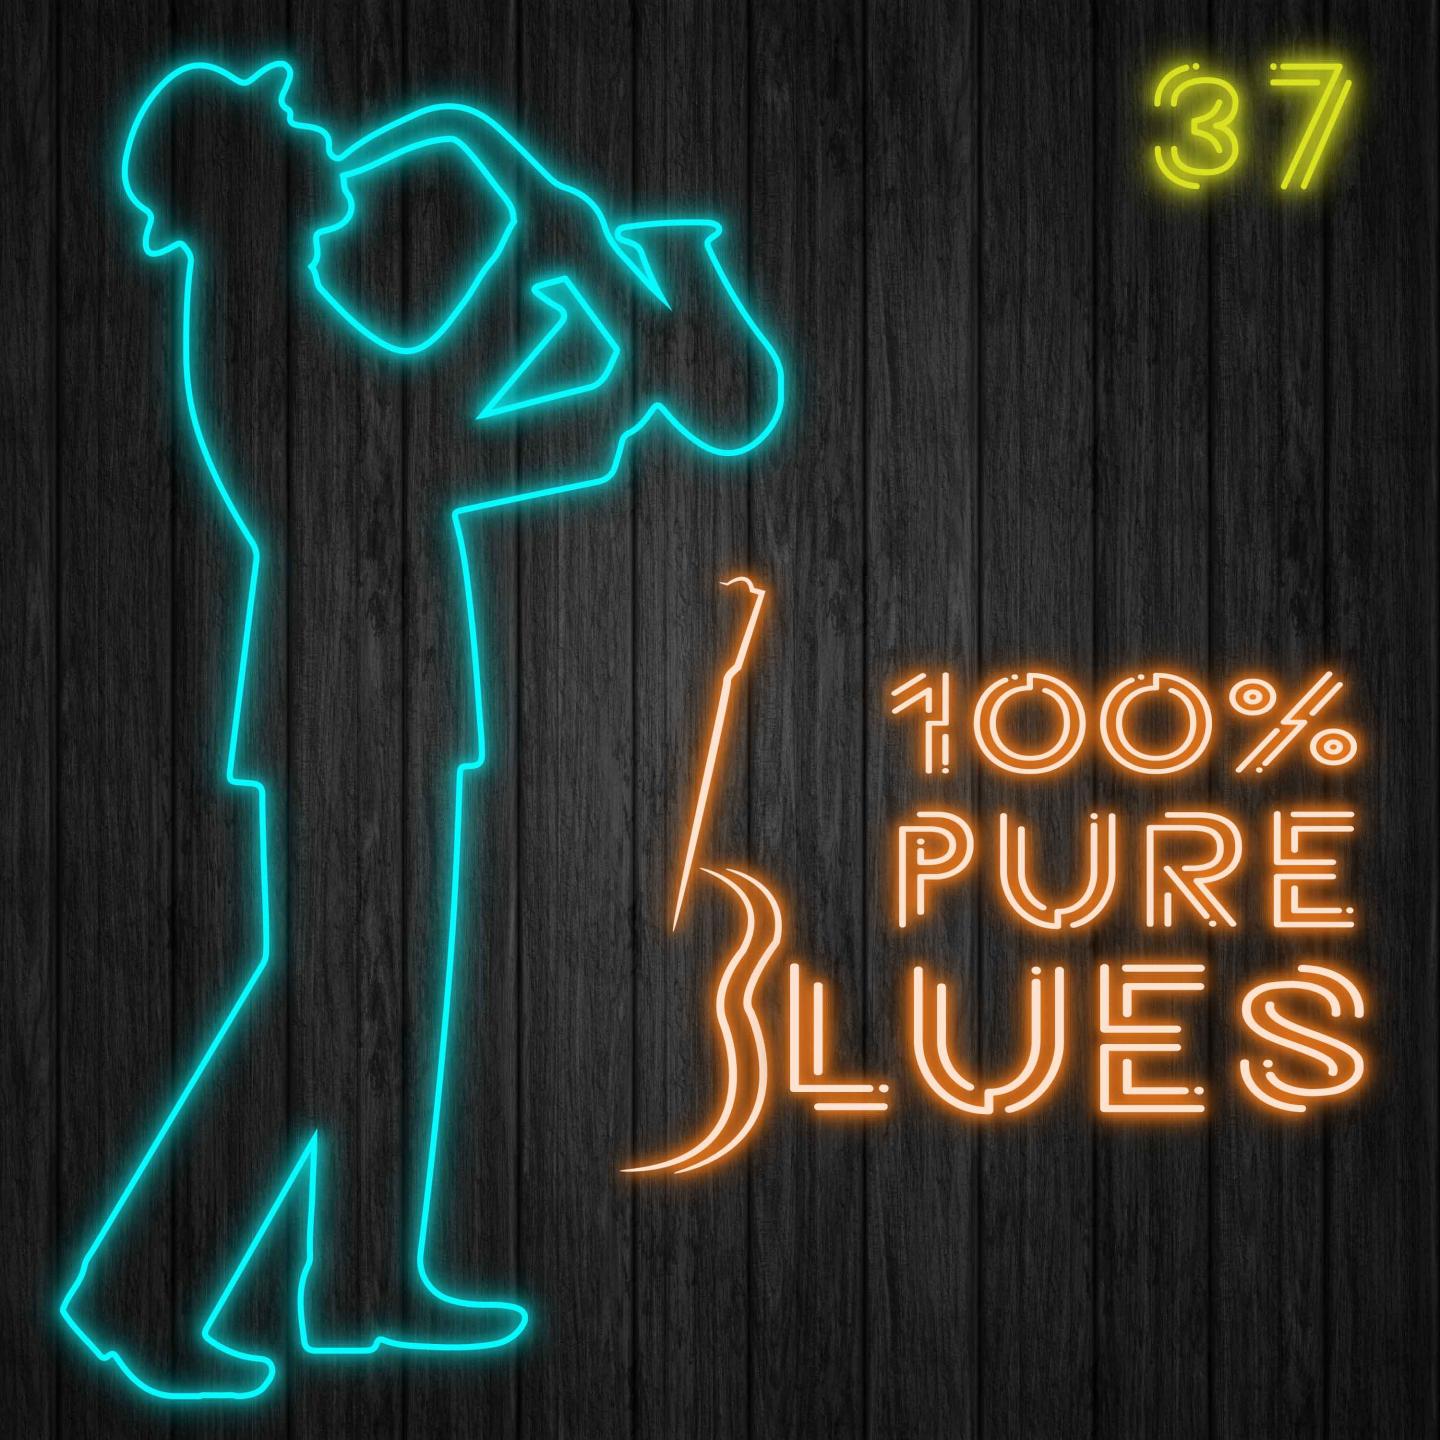 100% Pure Blues / 37